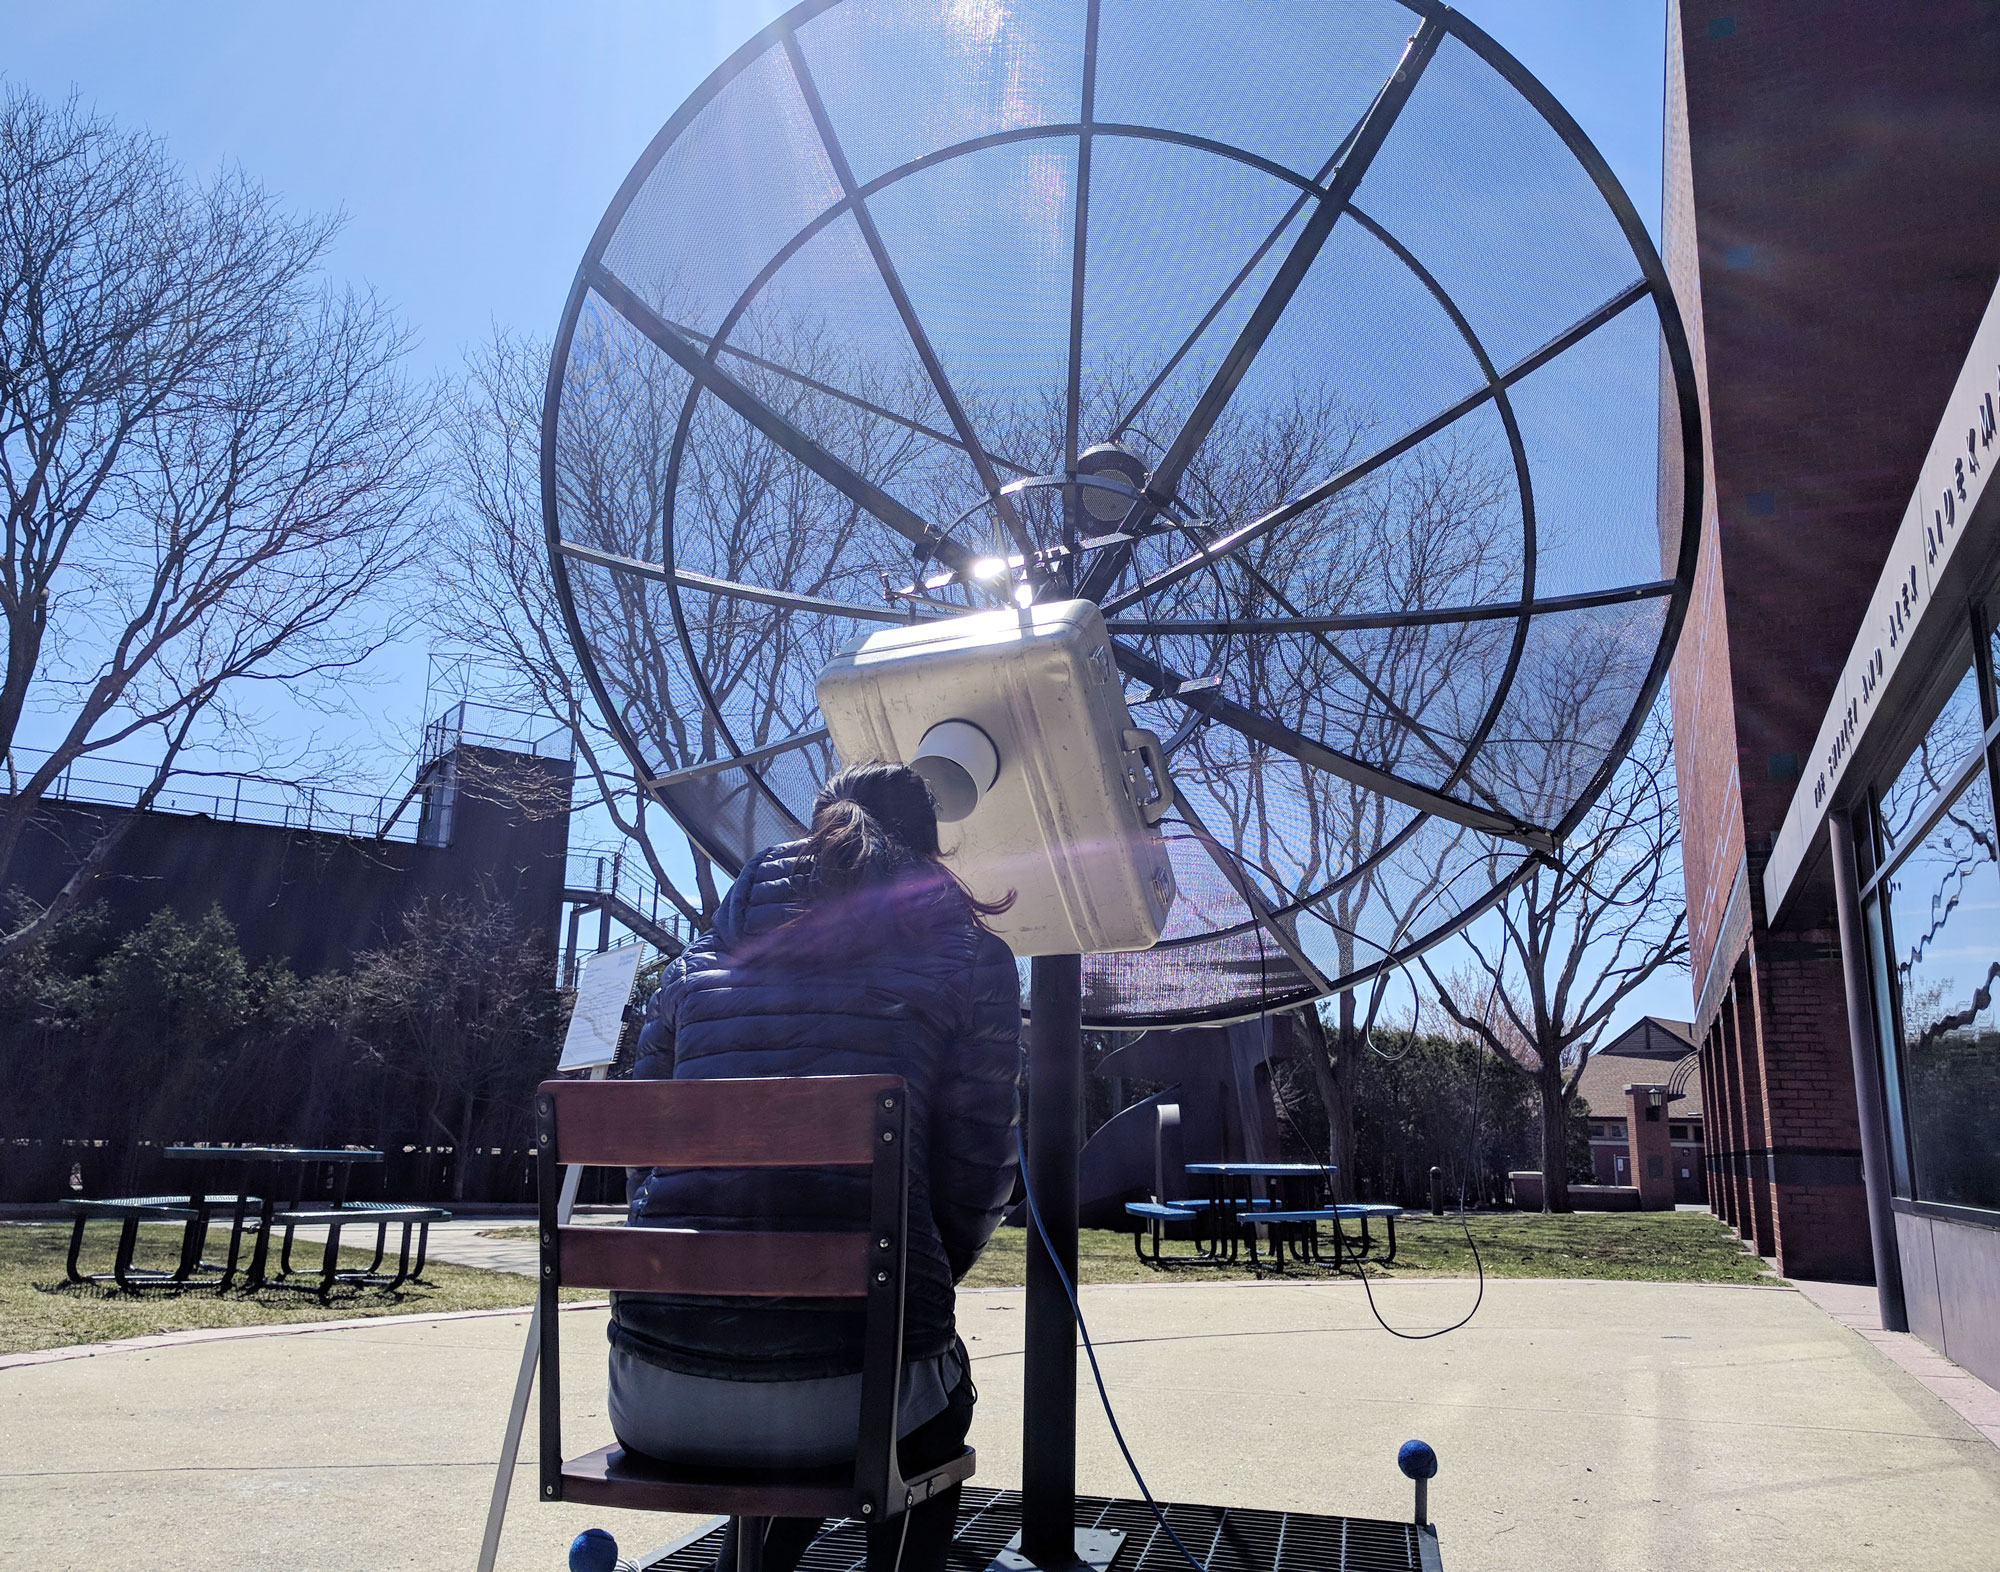 Go GOES Radiotelescope at Tufts University, Spring 2019